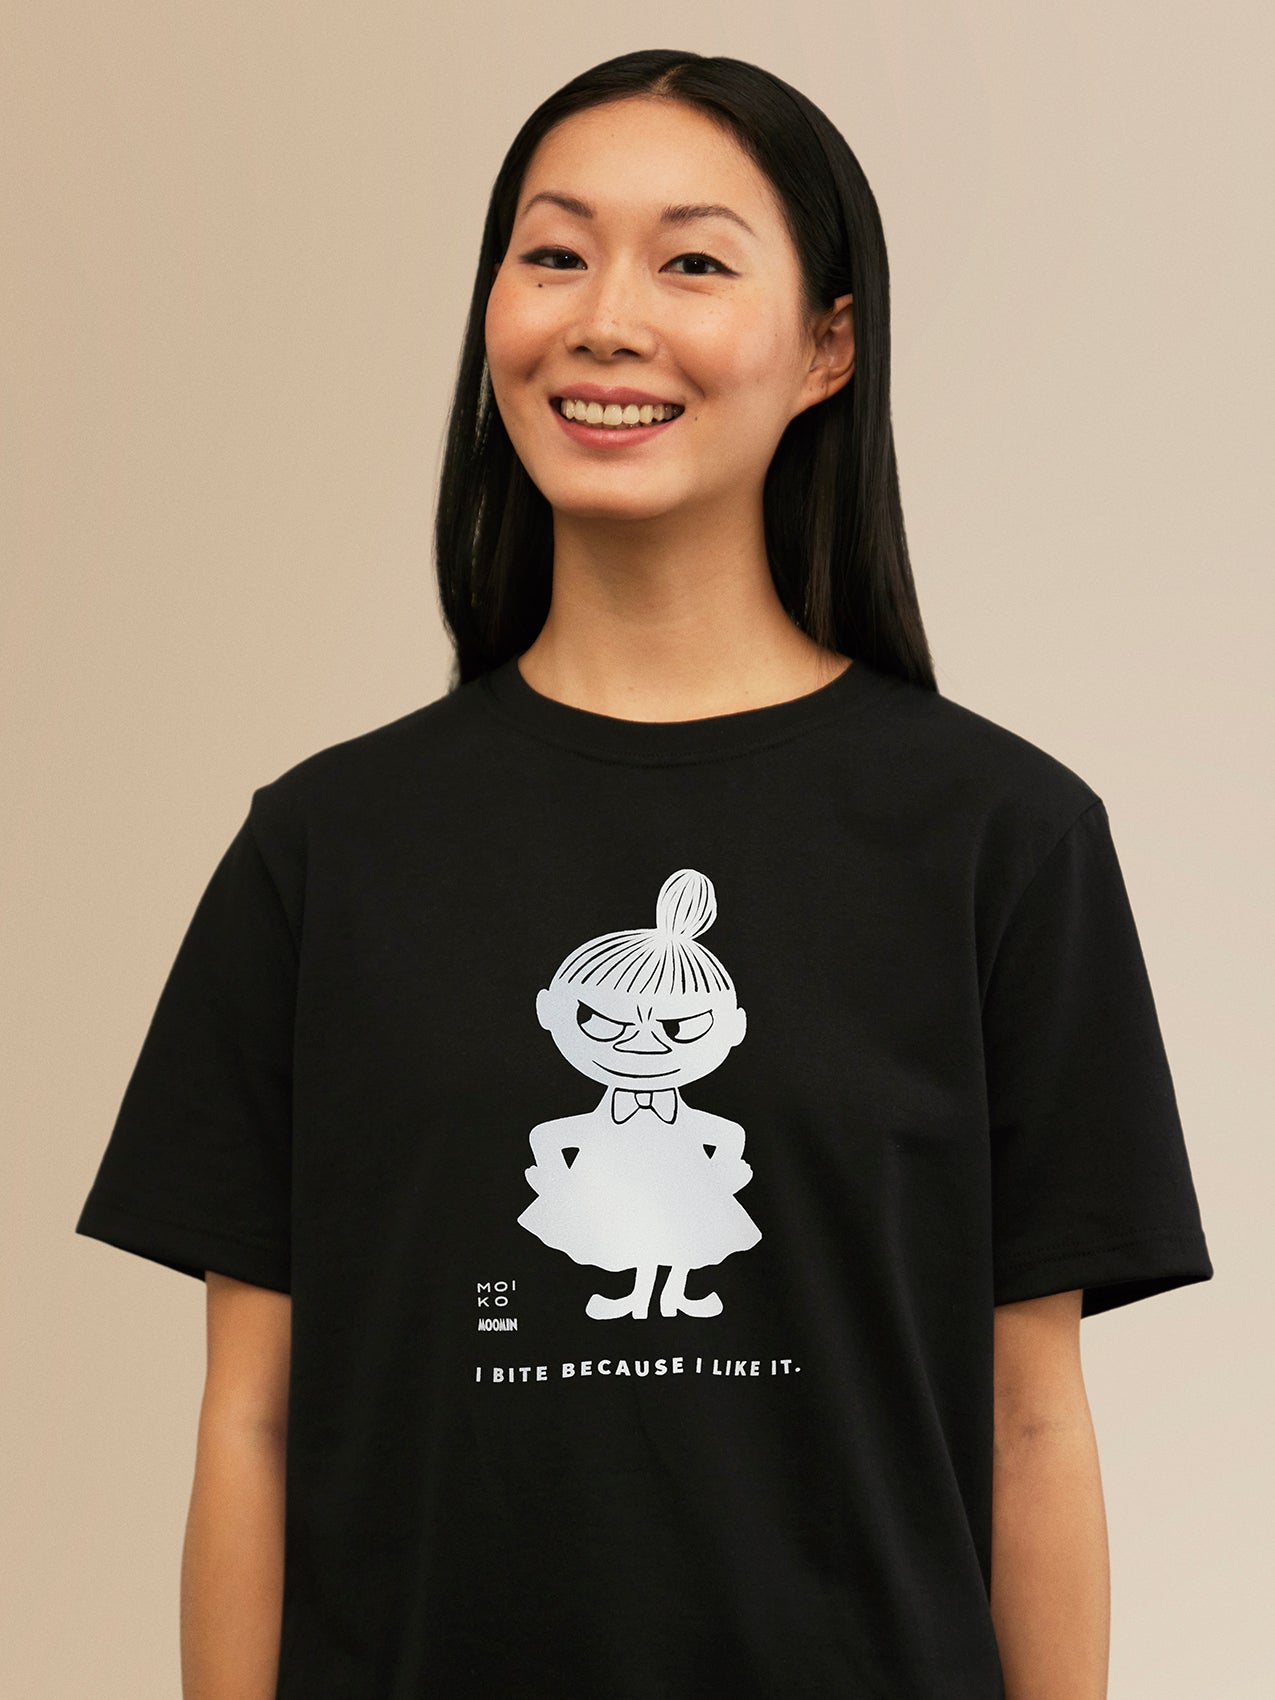 Moomin Cloud T-Shirt - T-shirt